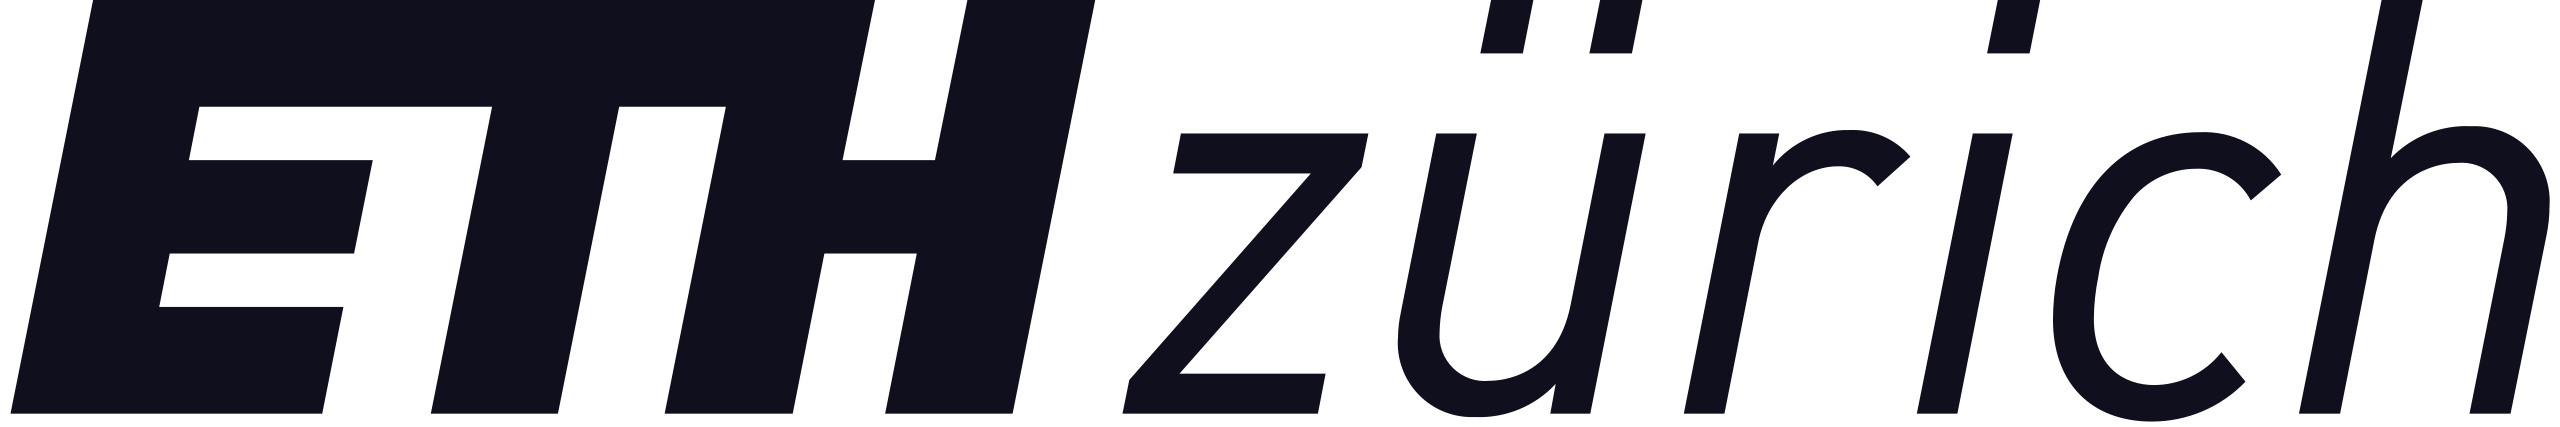 2560px ETH Zuerich Logo black svg